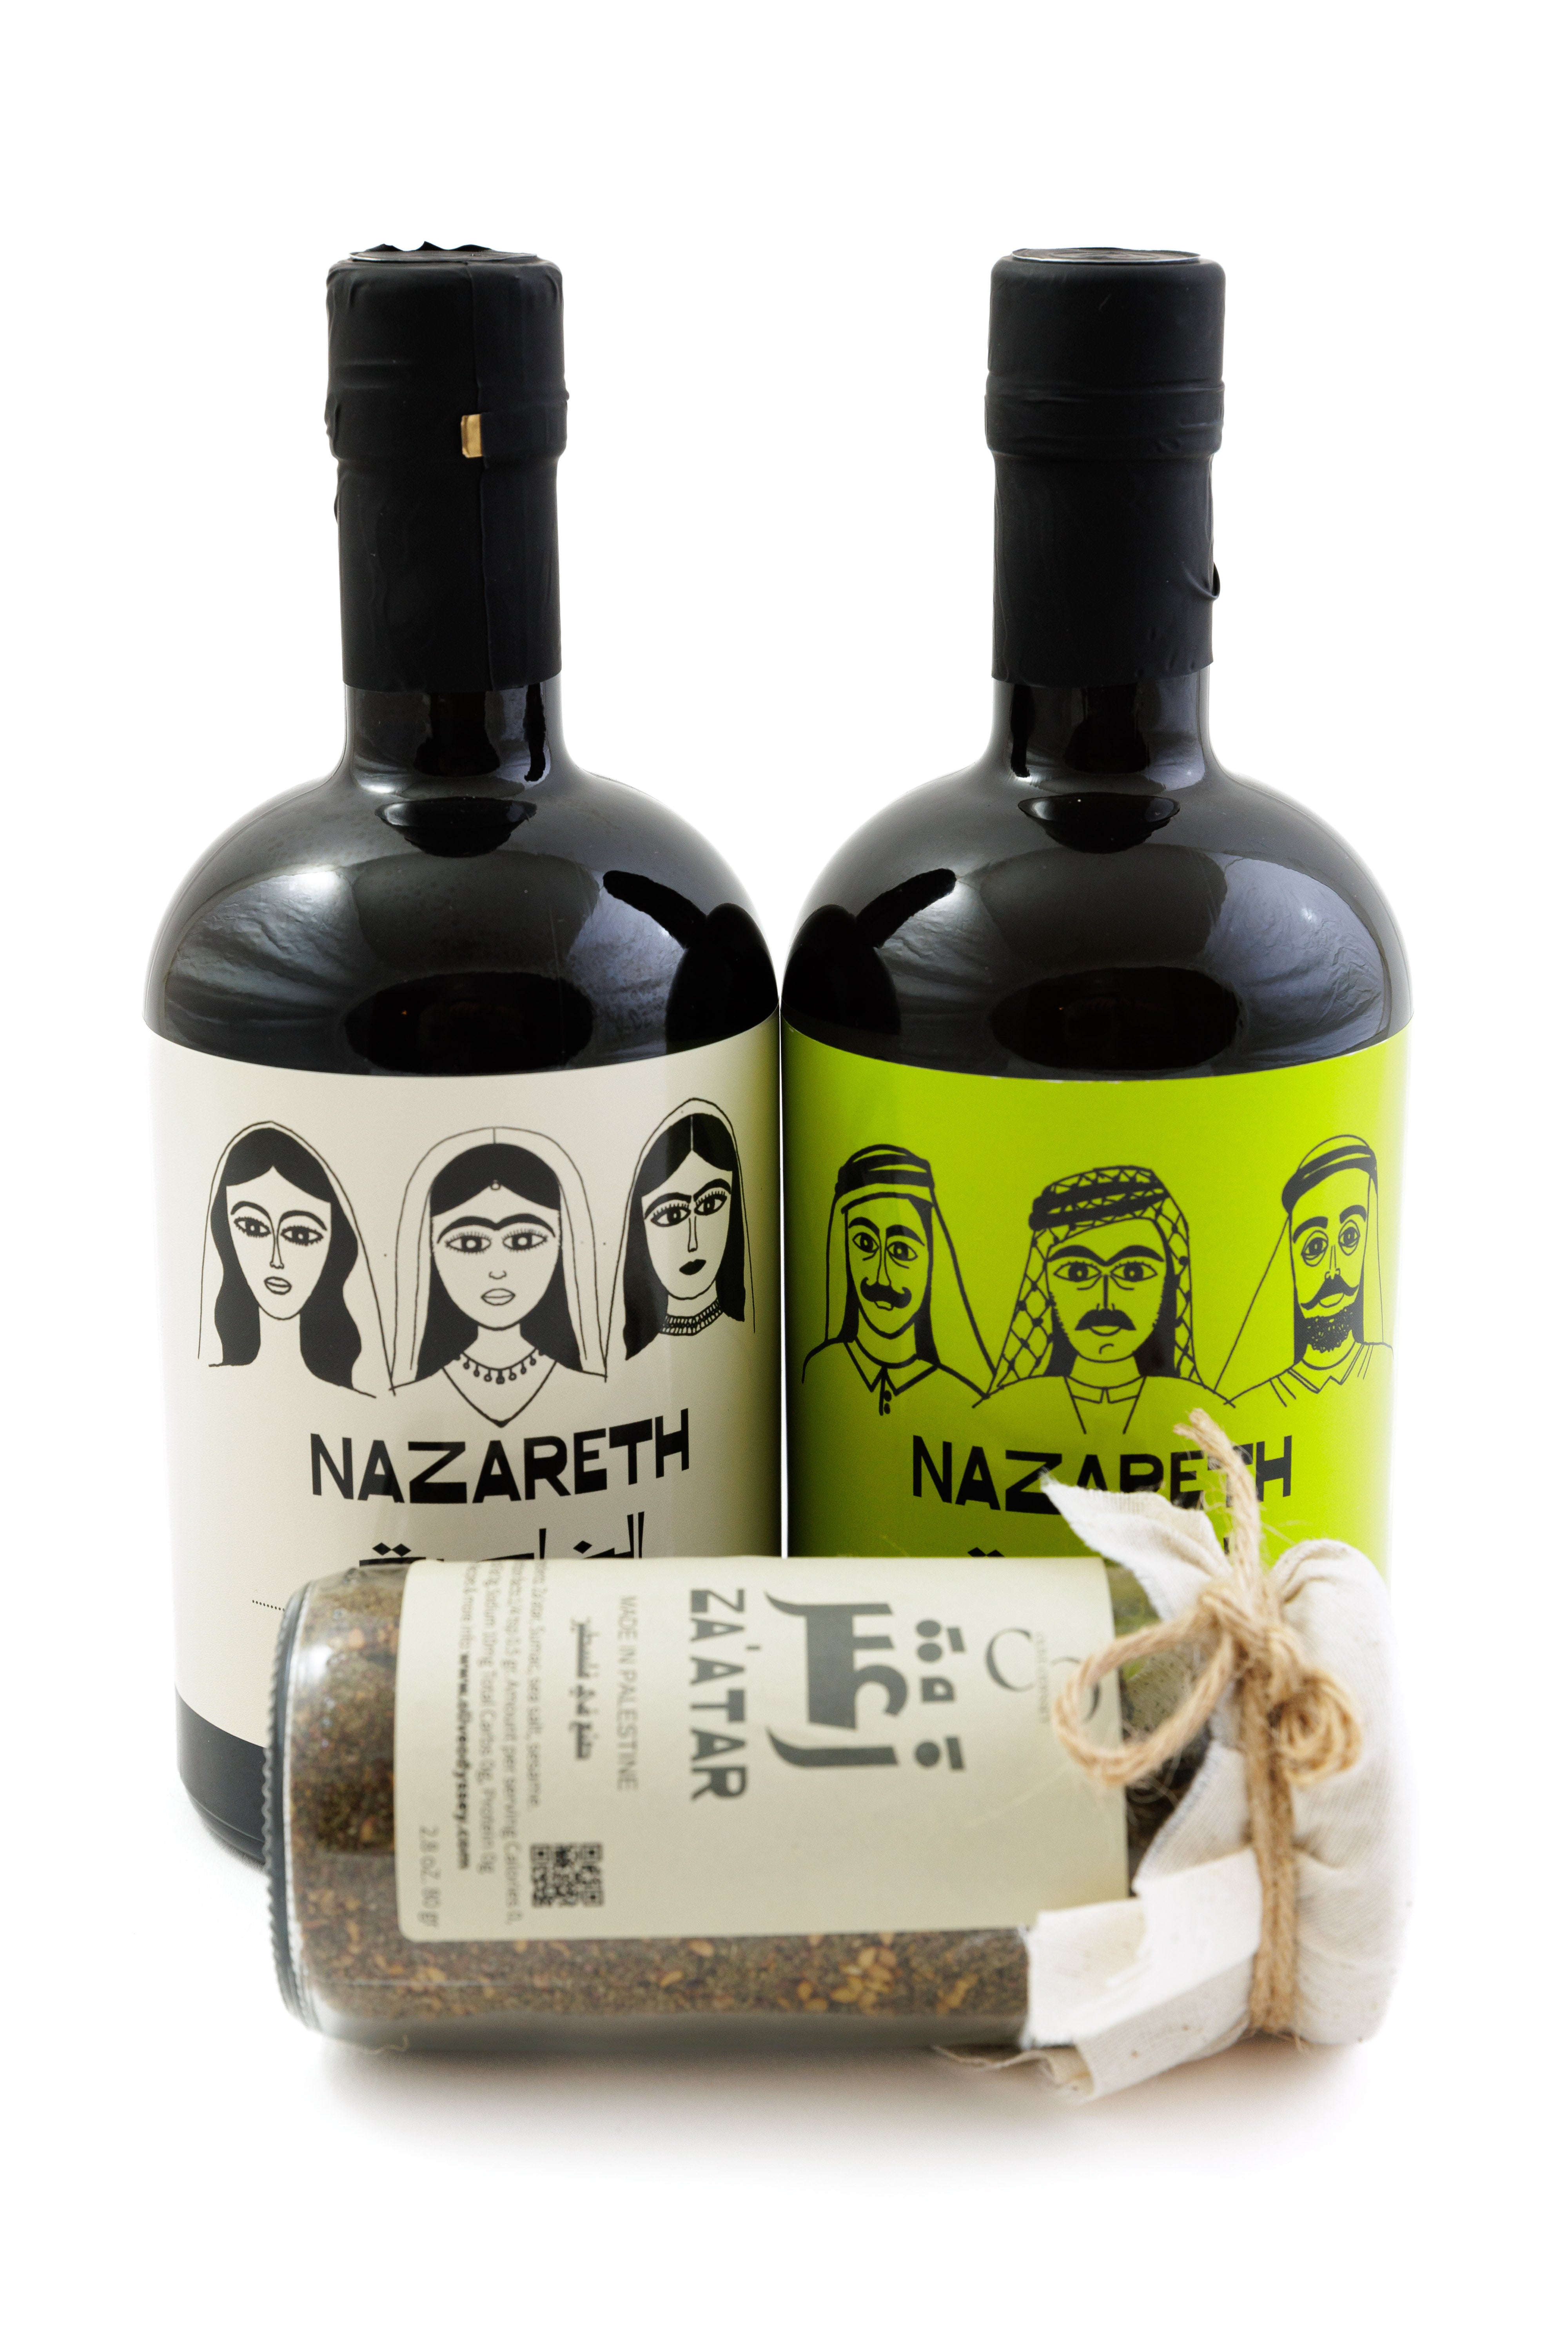 Nazareth-Paket